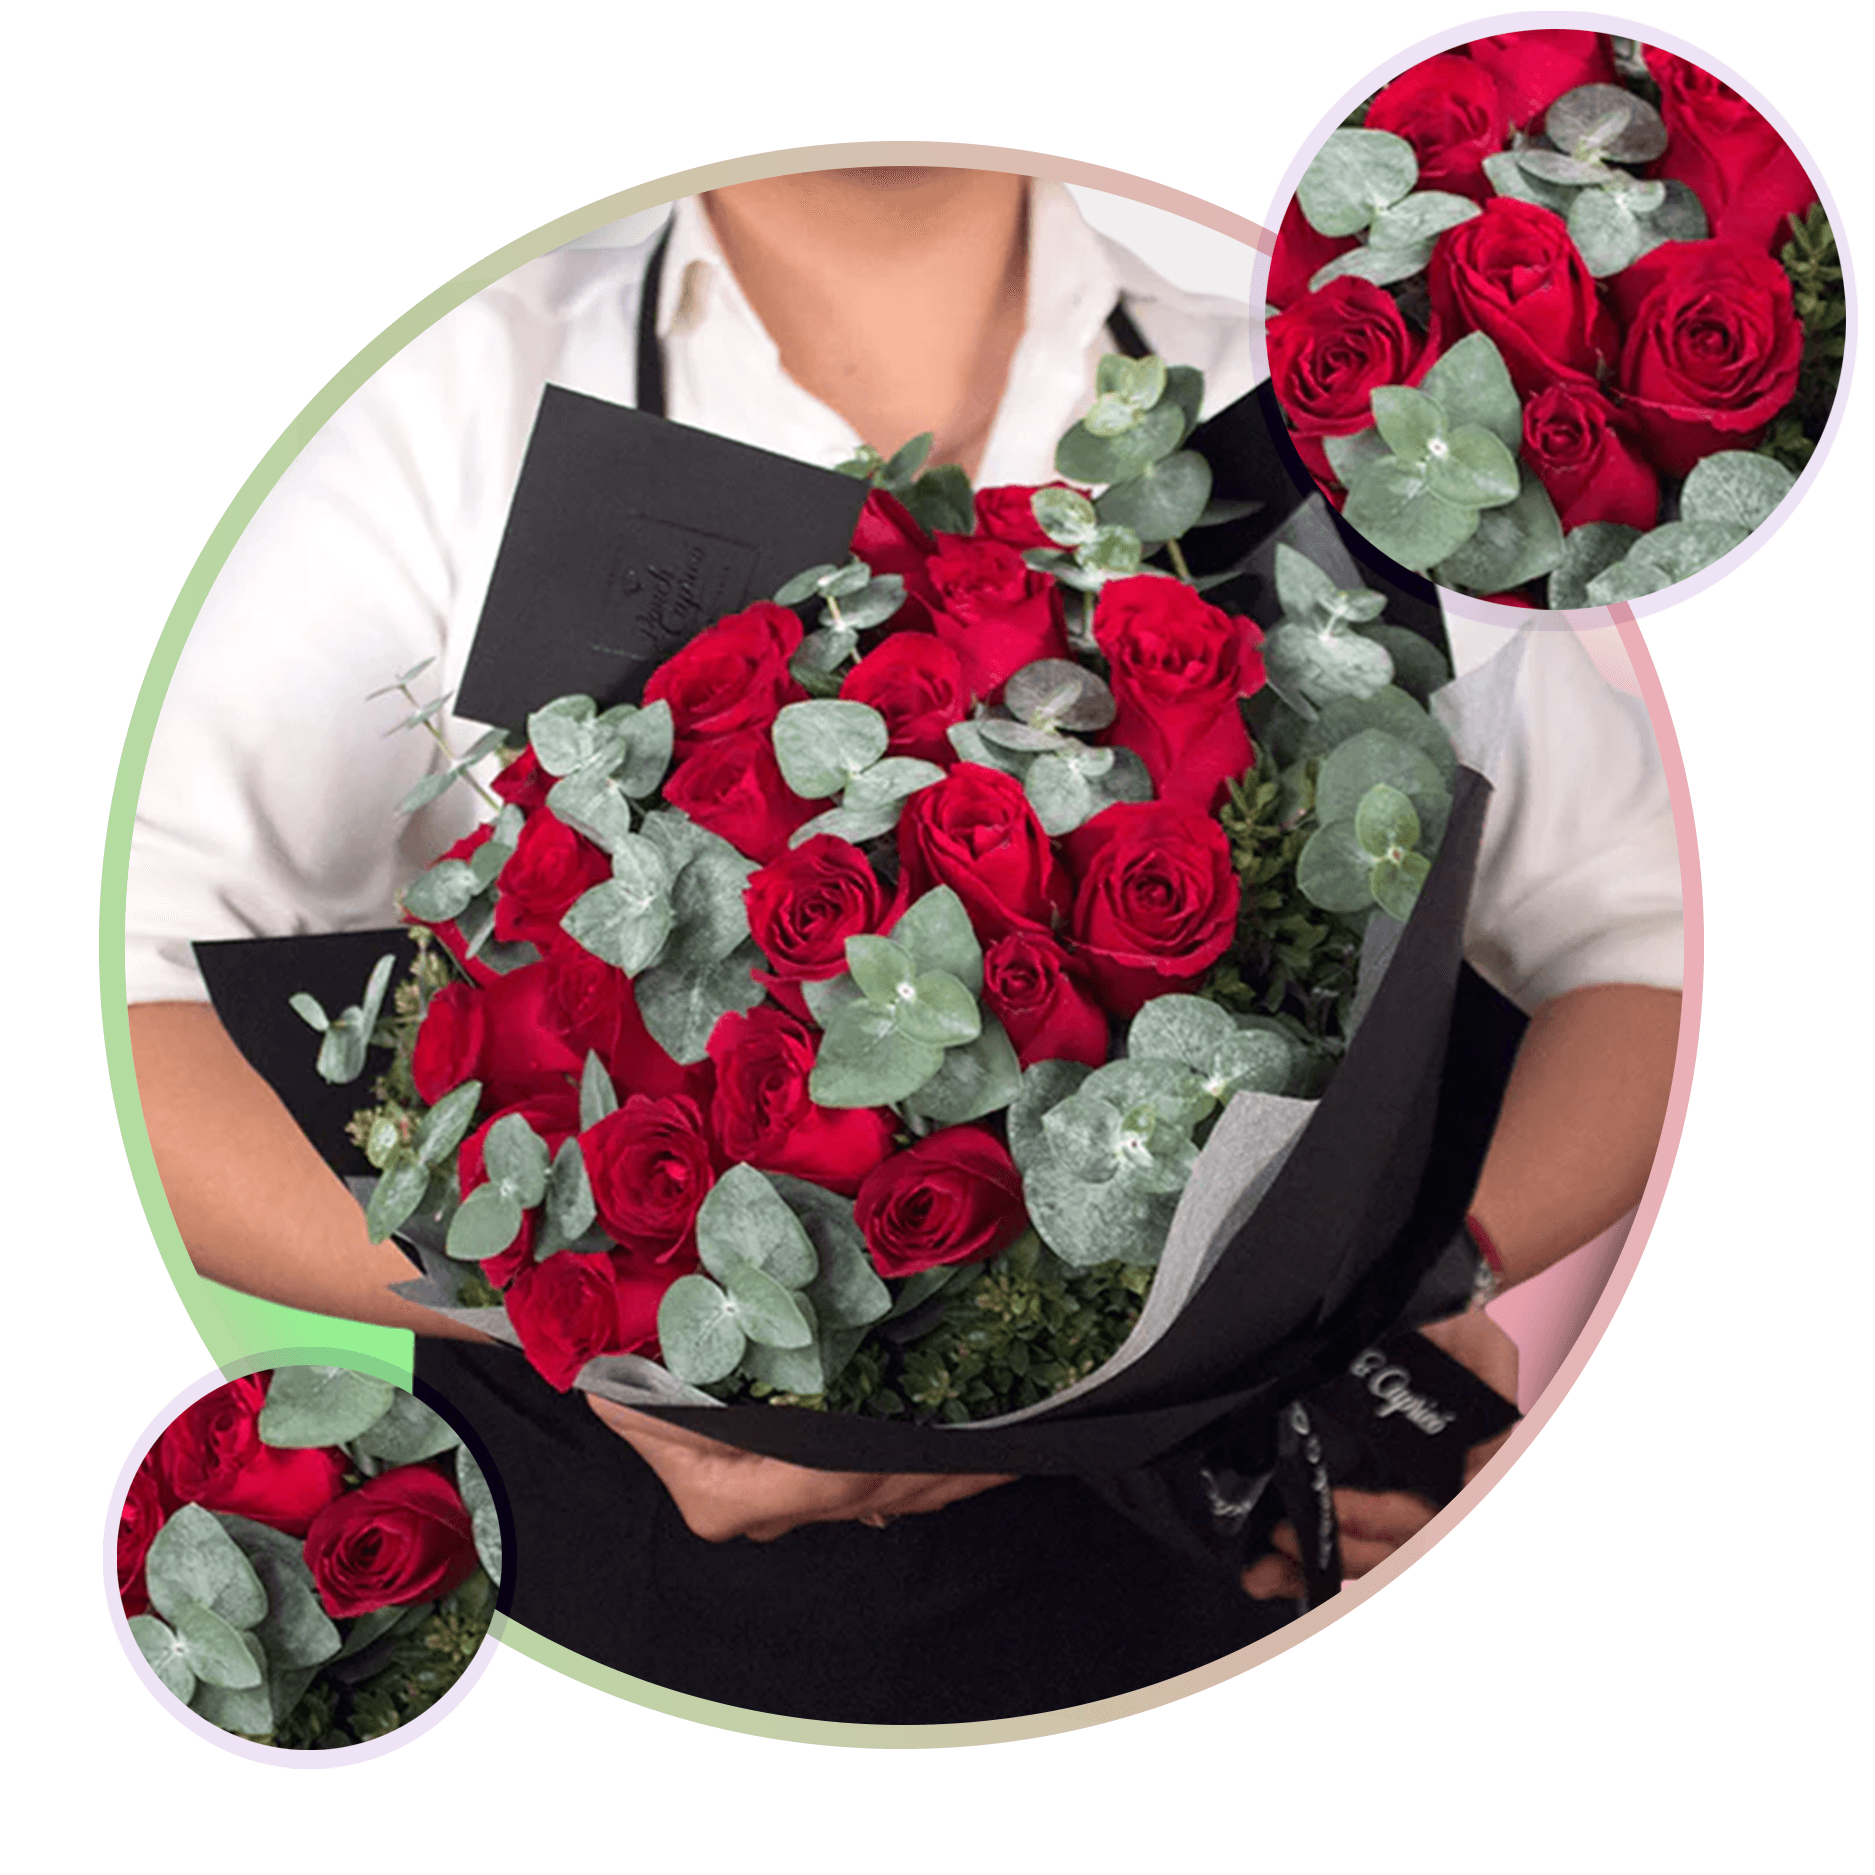 Bouquet de 24 Rosas Rojas. Floreria Ponch y Caprico Flores CDMX